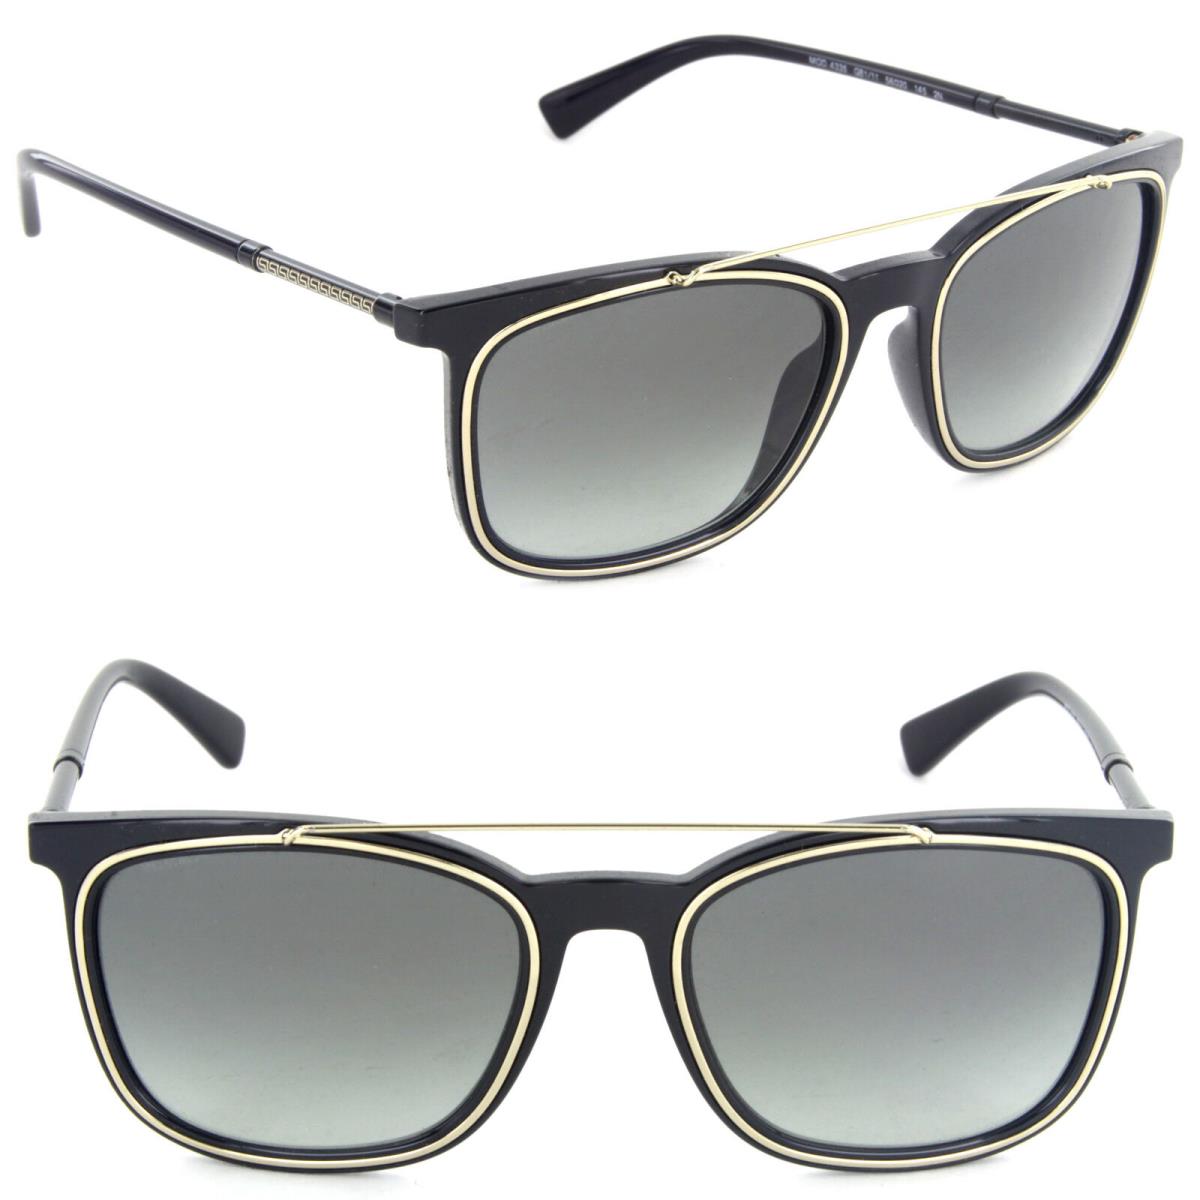 Versace VE4335-GB1/11-56 Square Sunglasses Black/gray Gradient Lens